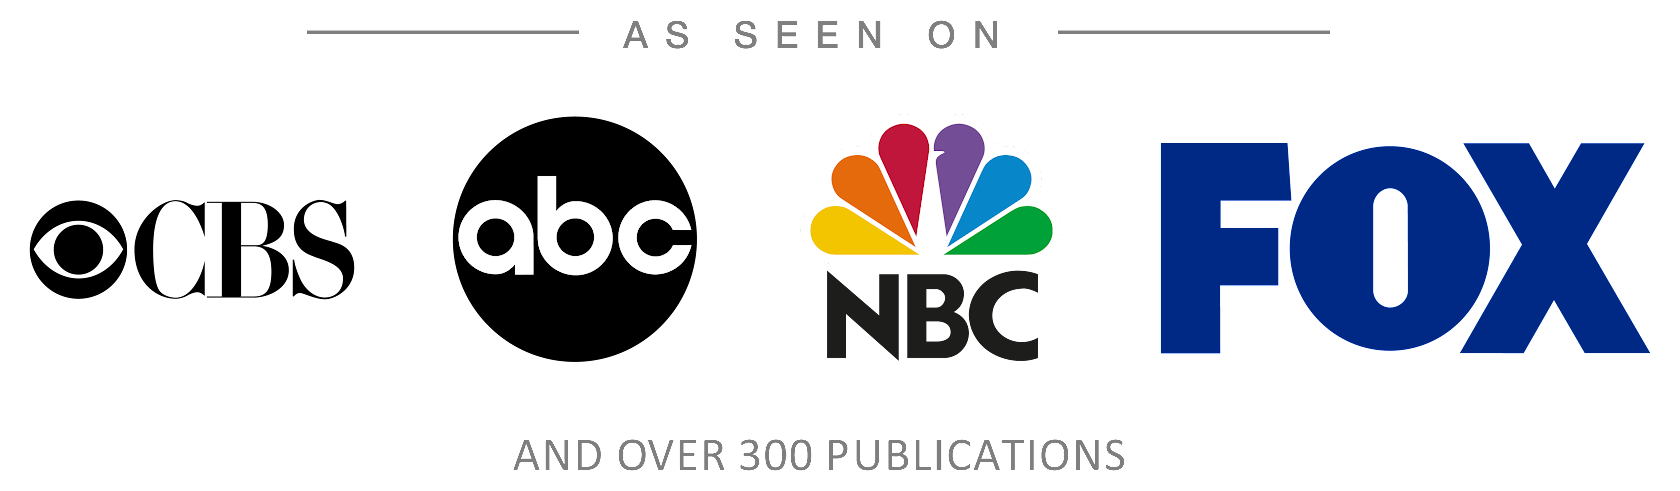 CBS abc NBC FOX logos